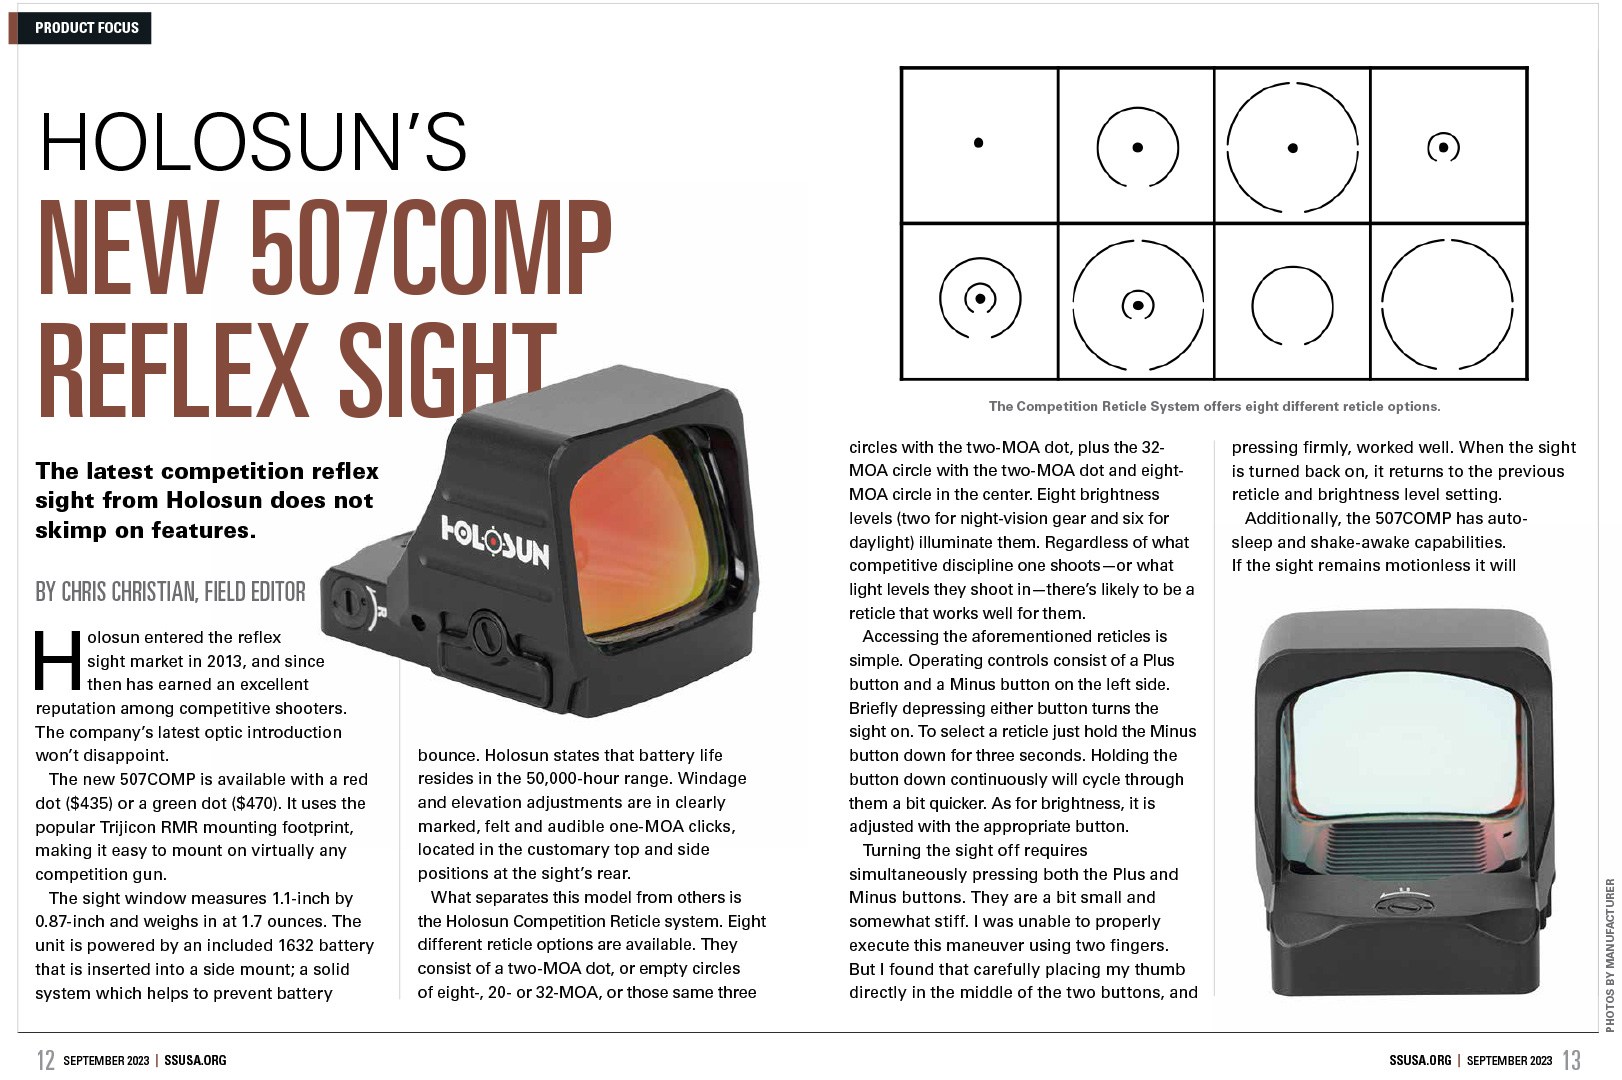 Holosun 507COMP reflex sight